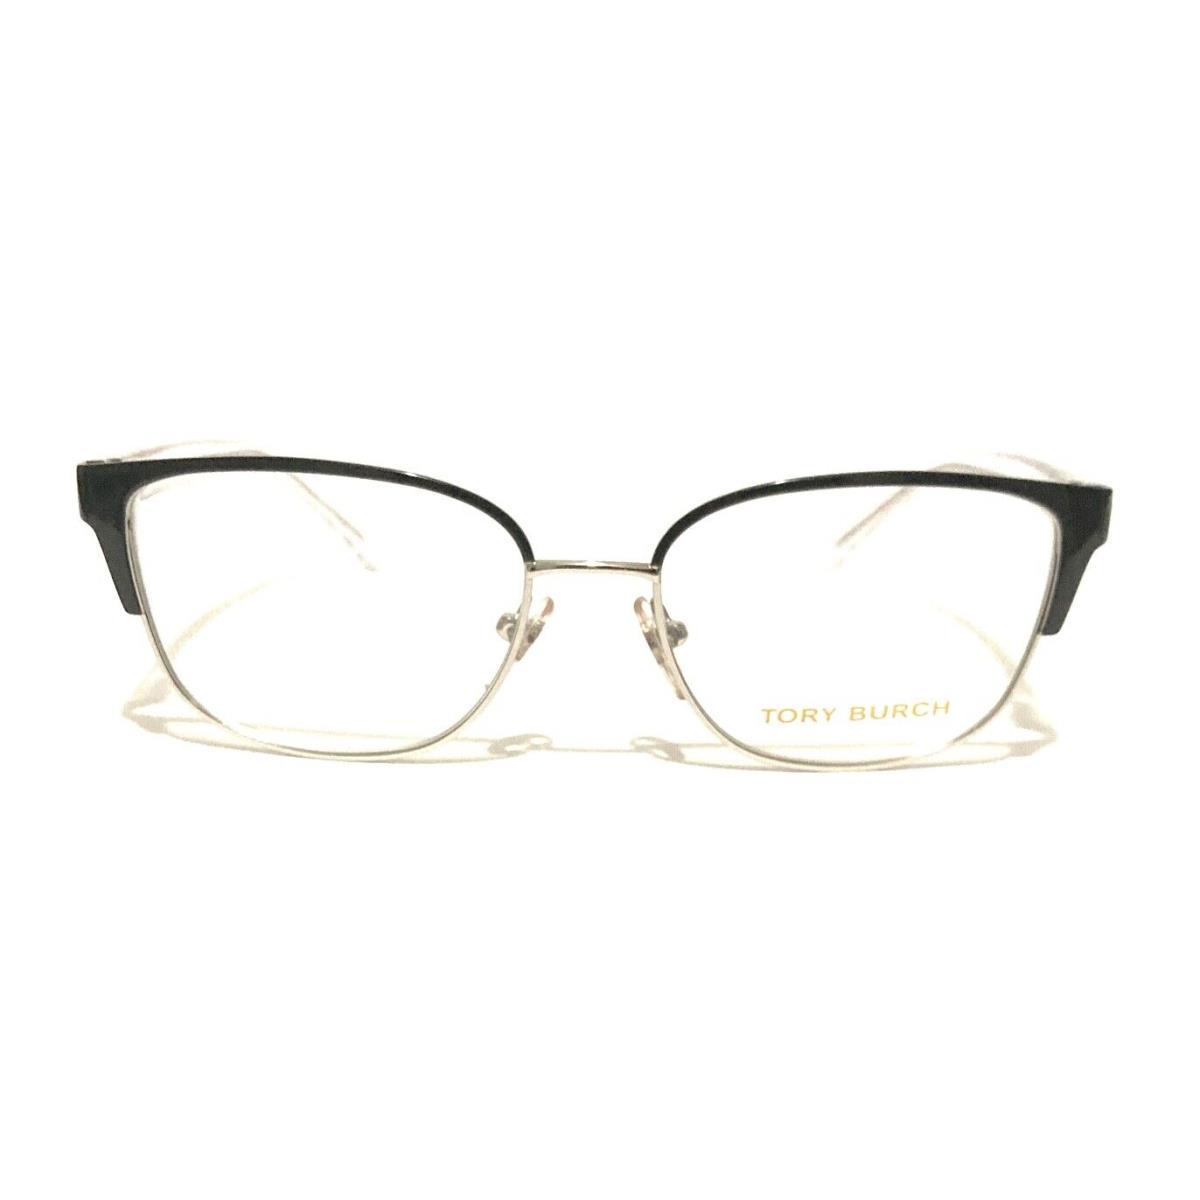 Tory Burch TY 1052 3059 Black Silver Eyeglasses RX 51-16-135